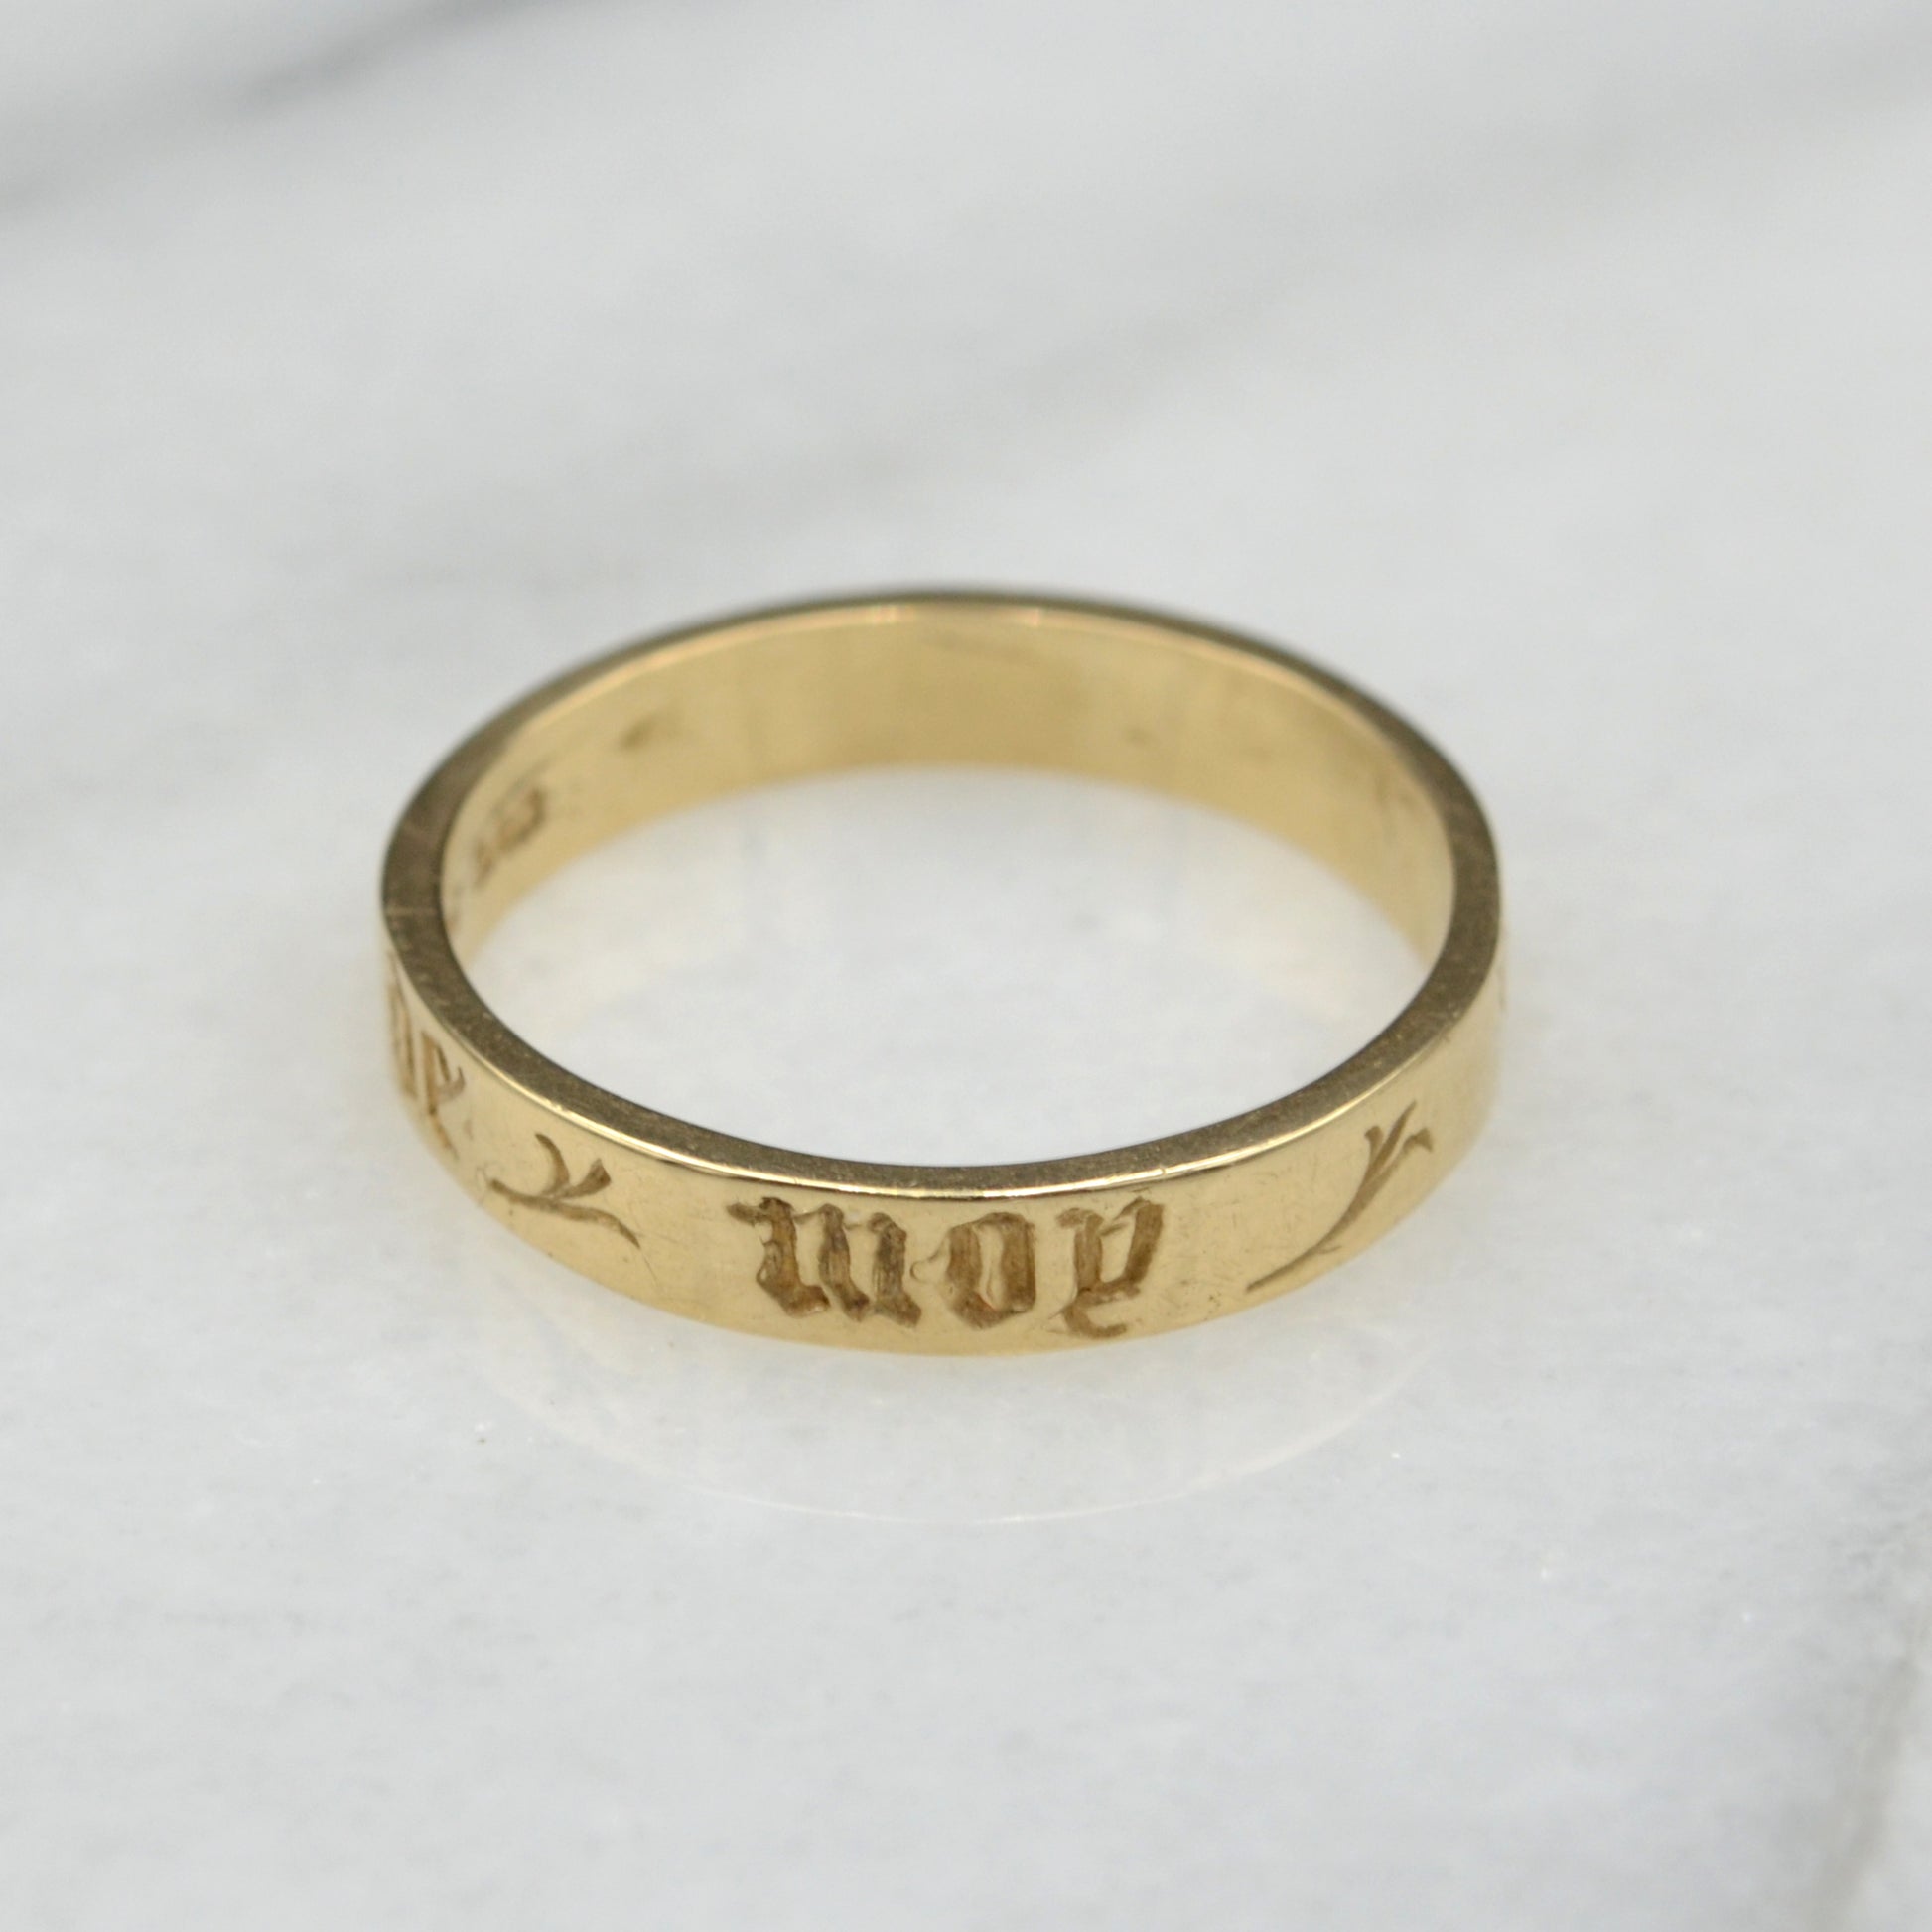 Vintage 14k Gold “Pencez de Moy” Antique Reproduction Posy/Poesy Ring